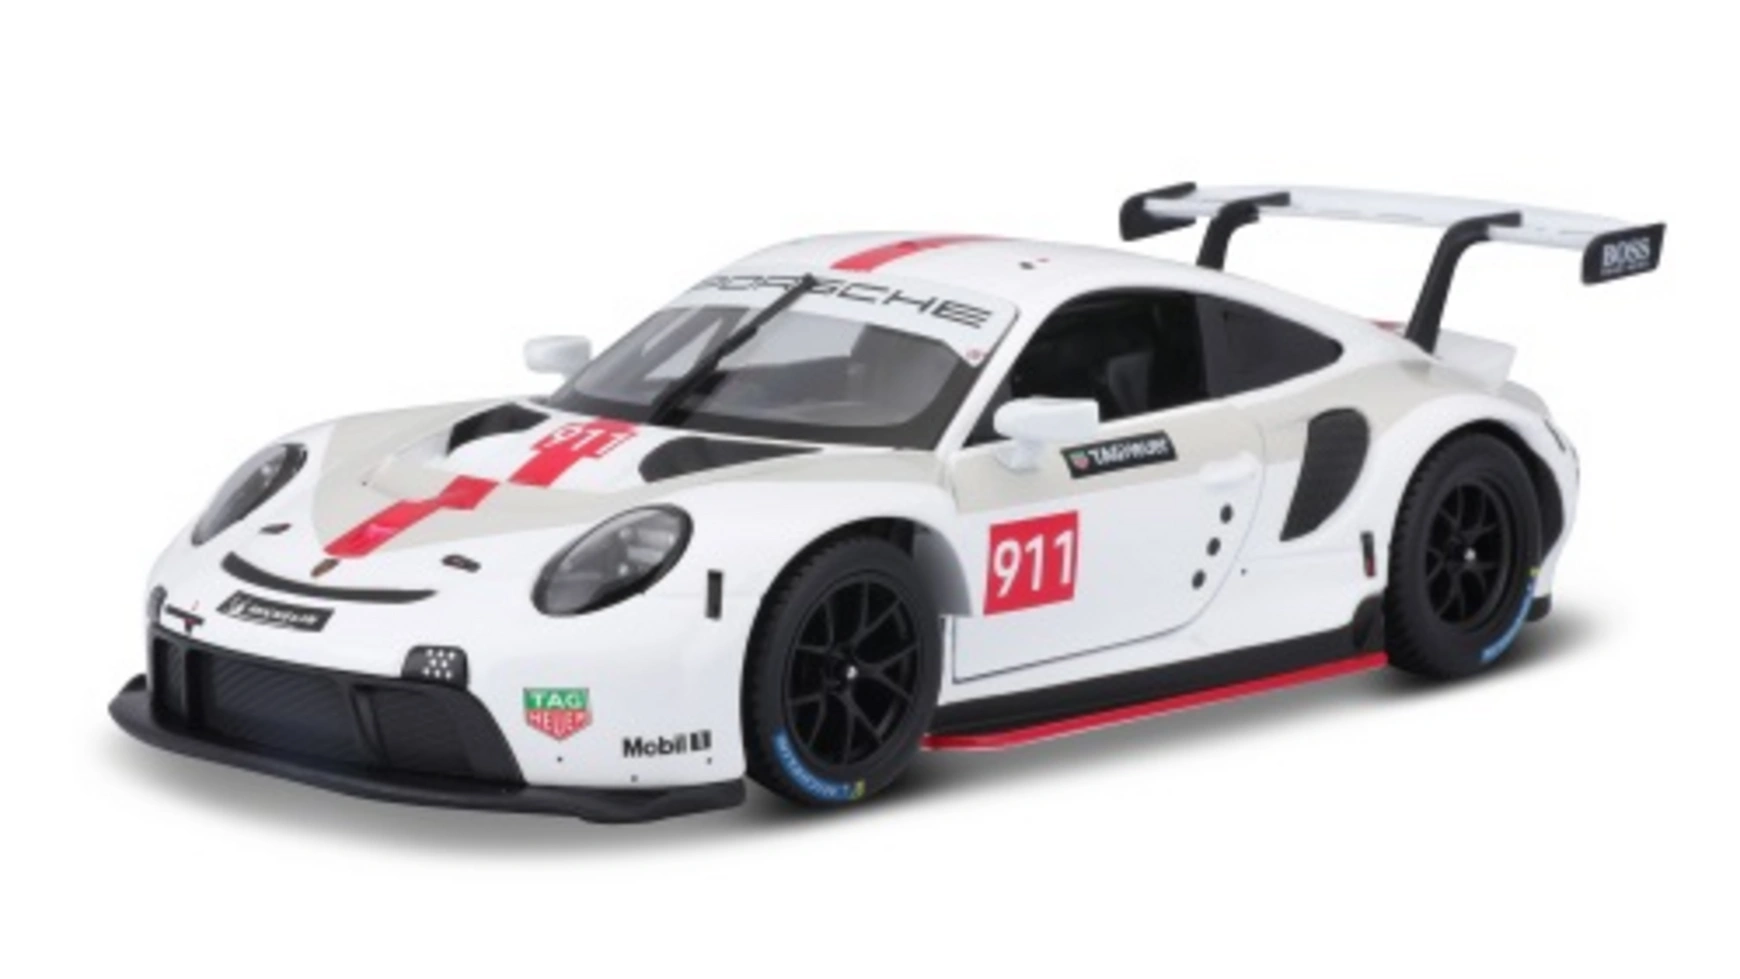 Bburago Гонка Porsche 911 RSR GT 1:24 (2020) машинка bburago металлическая коллекционная 1 24 porsche 911 rsr lm 2020 18 28016